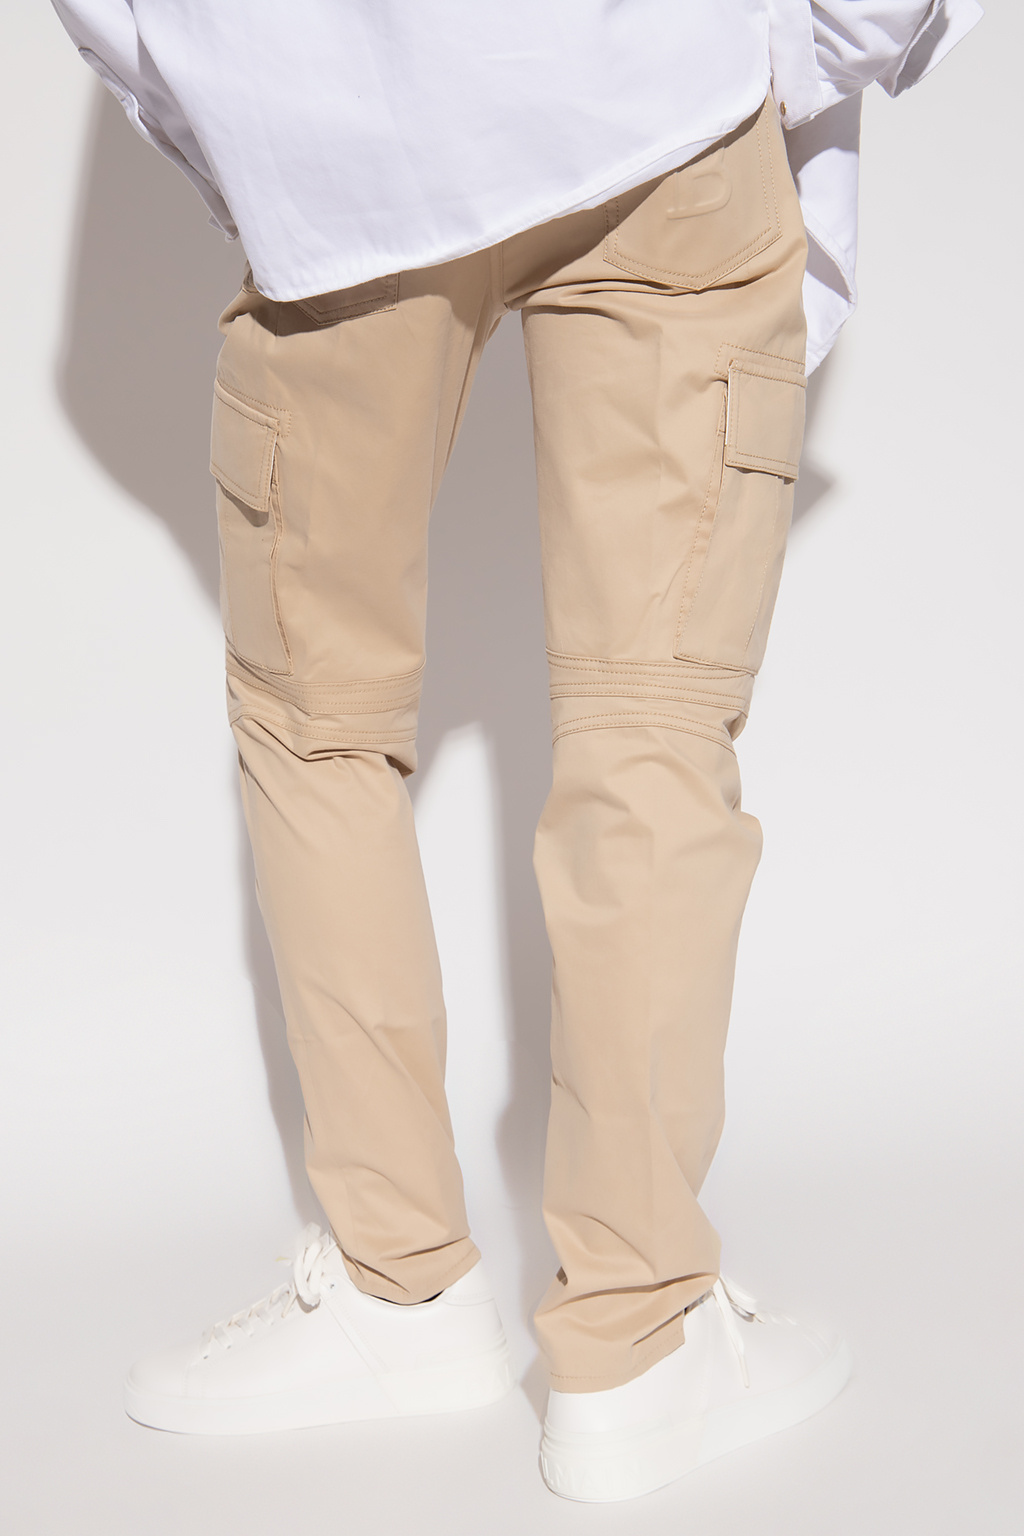 Balmain dot trousers with pockets